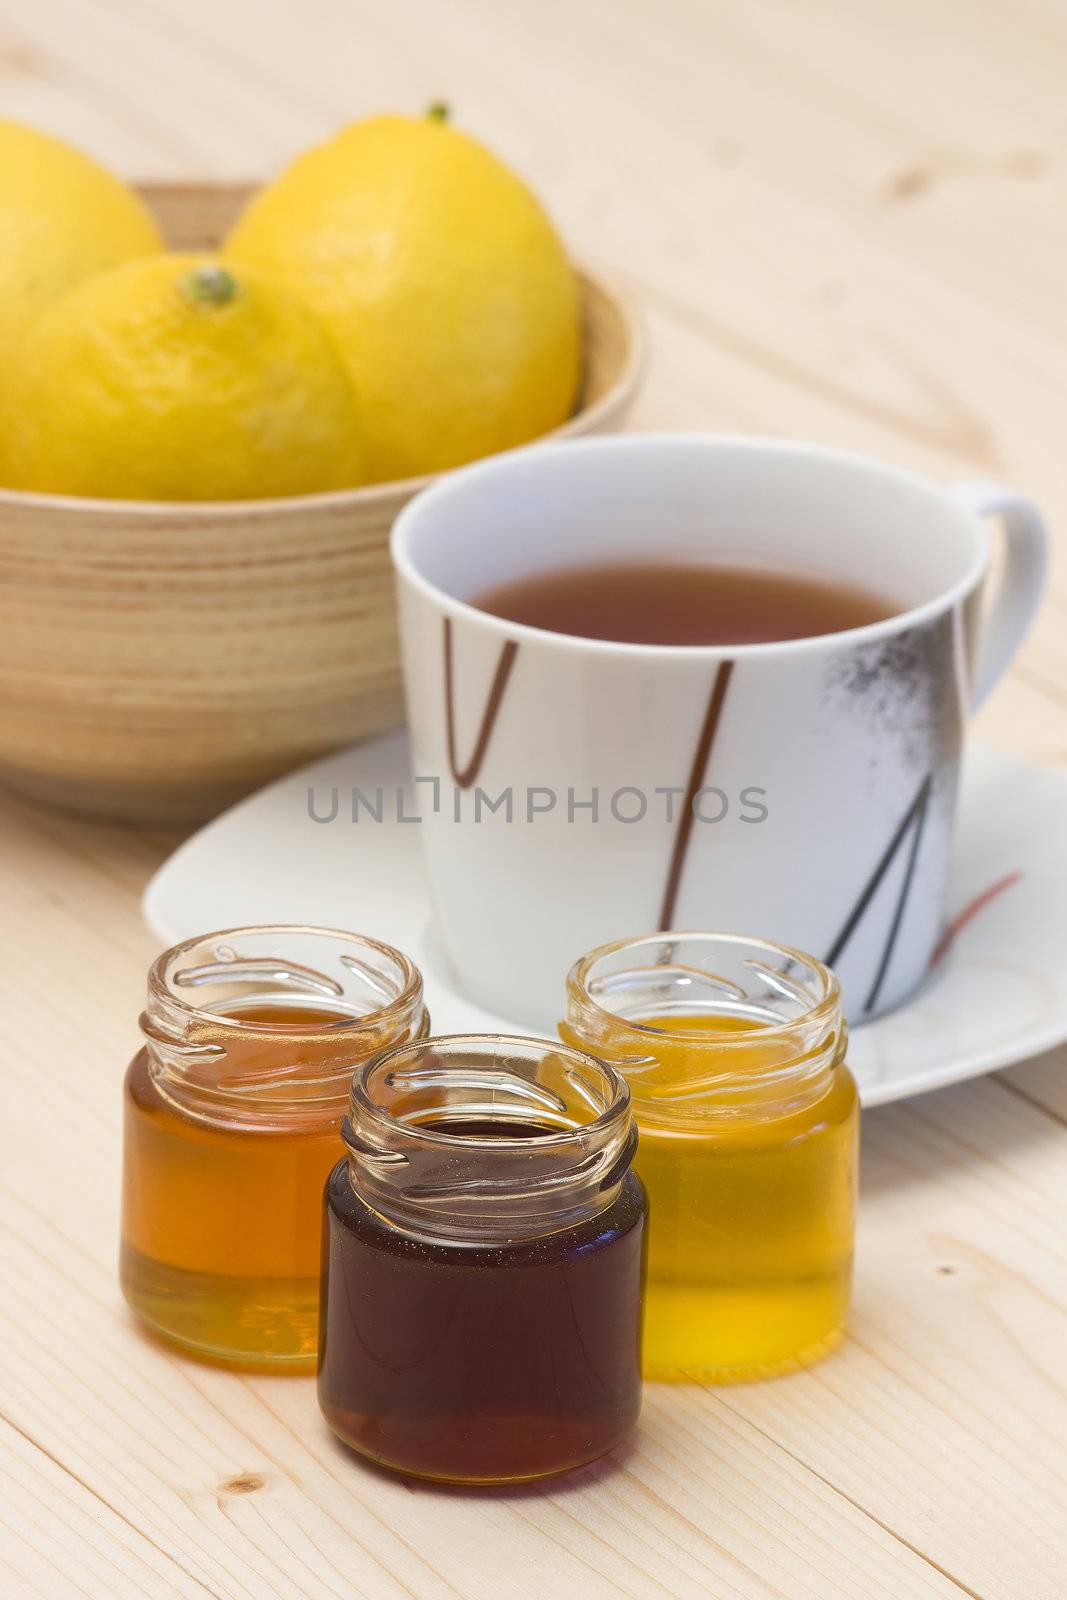 cup of tea, honey and fresh lemons by miradrozdowski